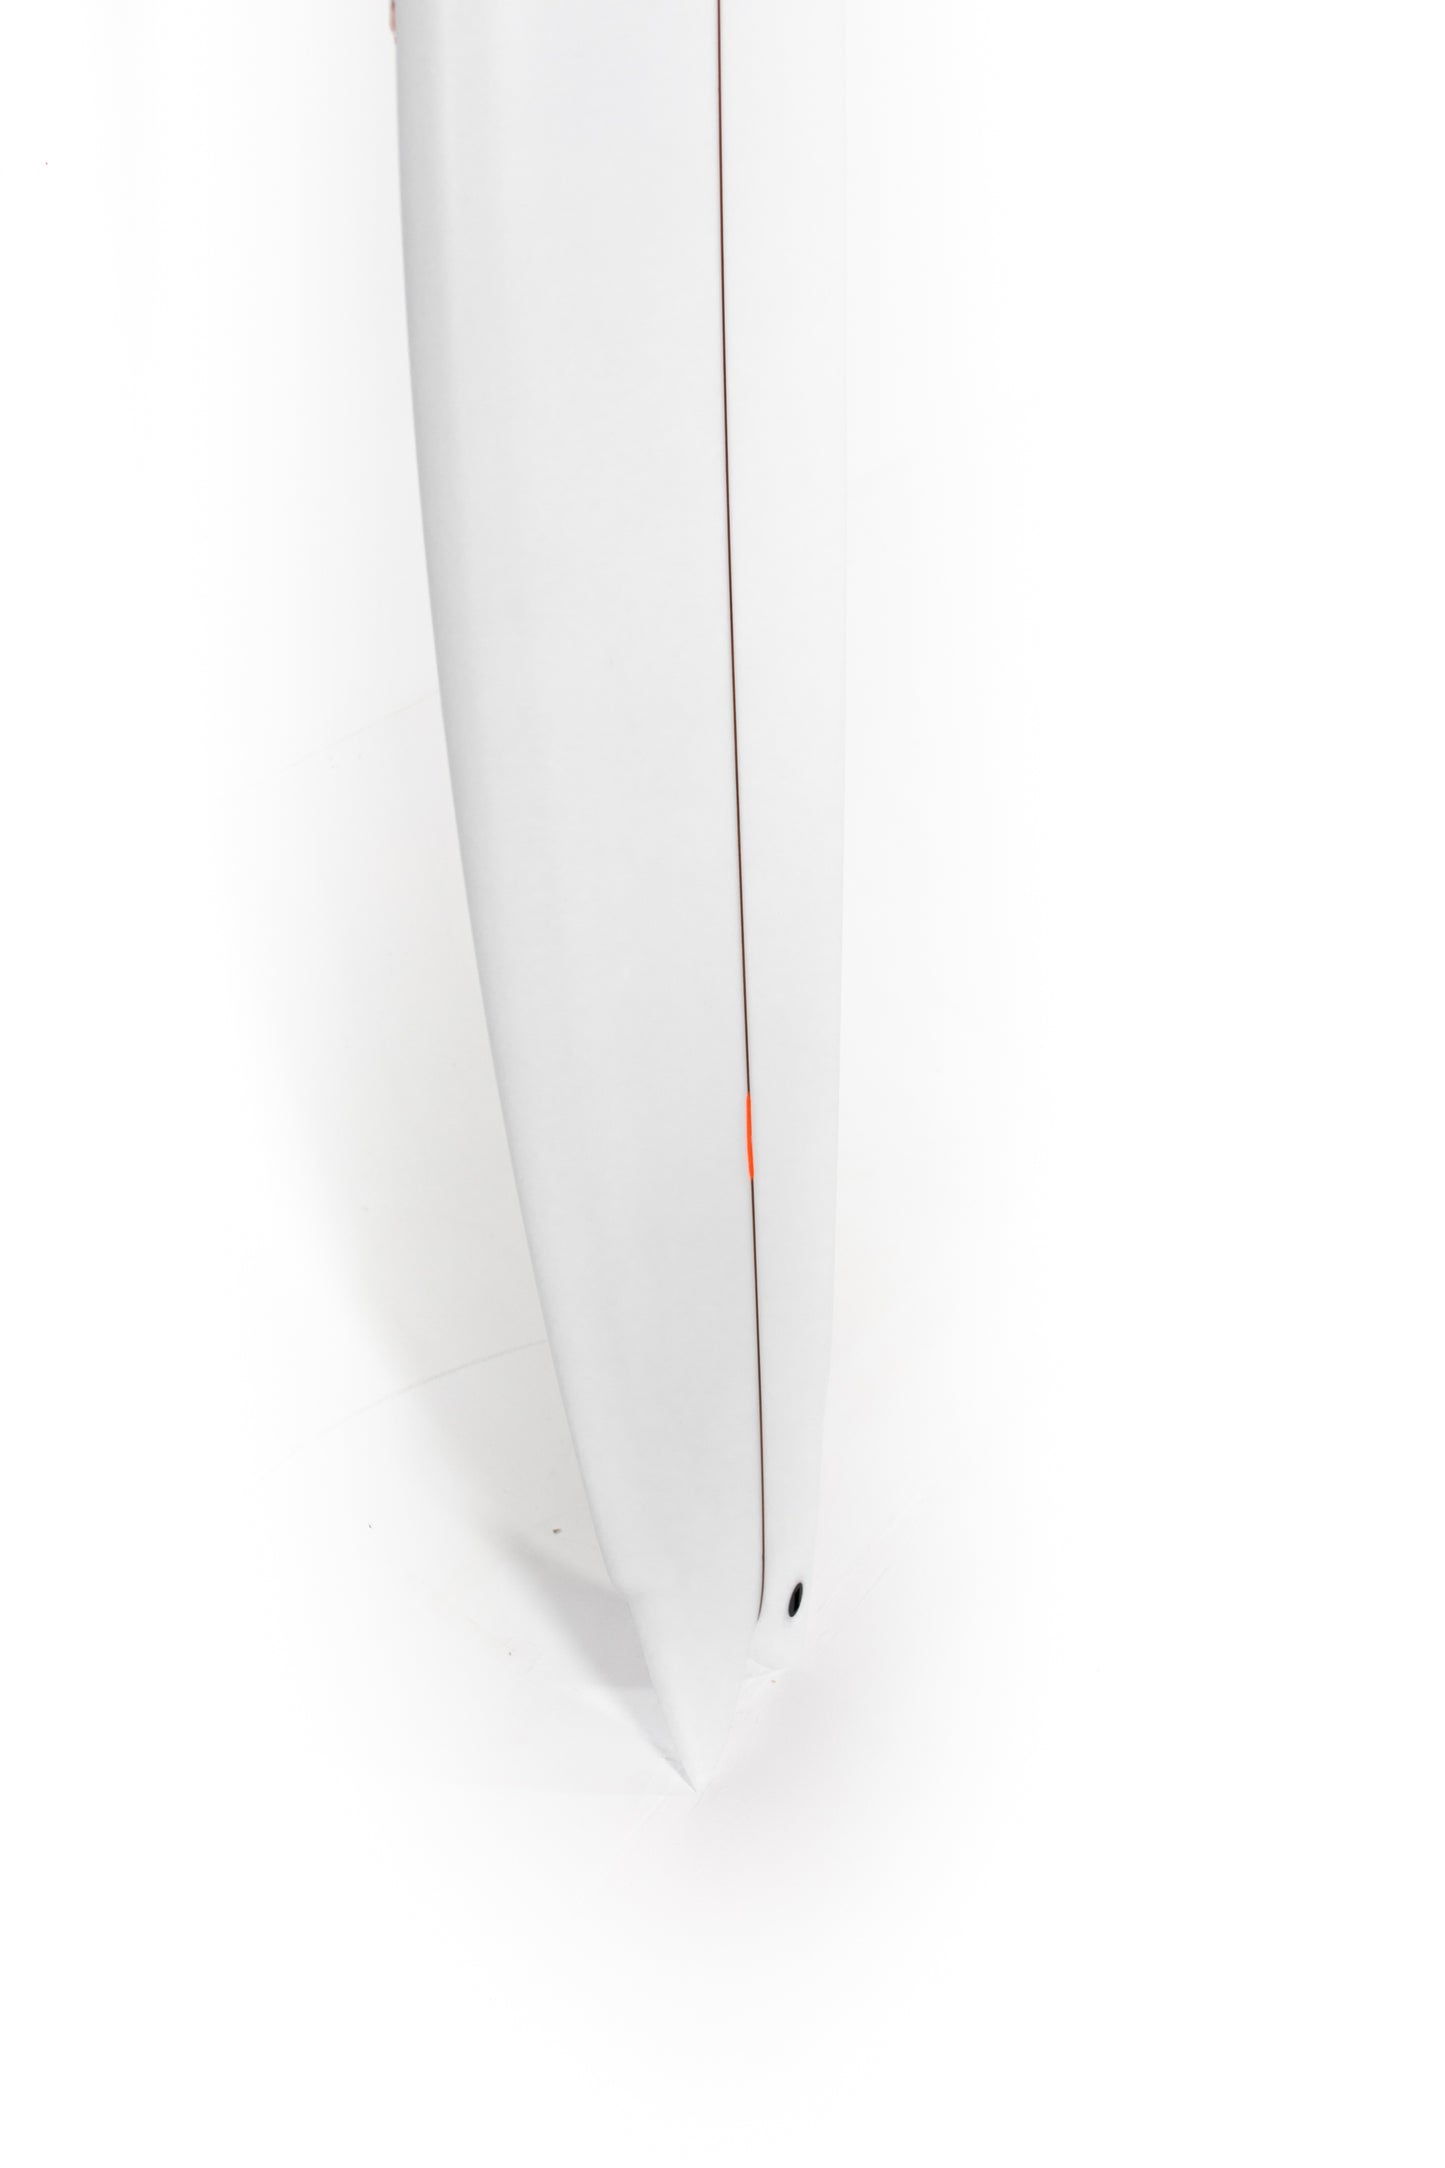 
                  
                    Pukas Surf Shop - Christenson Surfboard  - WOLVERINE by Chris Christenson - 6’8 x 20 7/8 x 2 11/16 - CX05373
                  
                